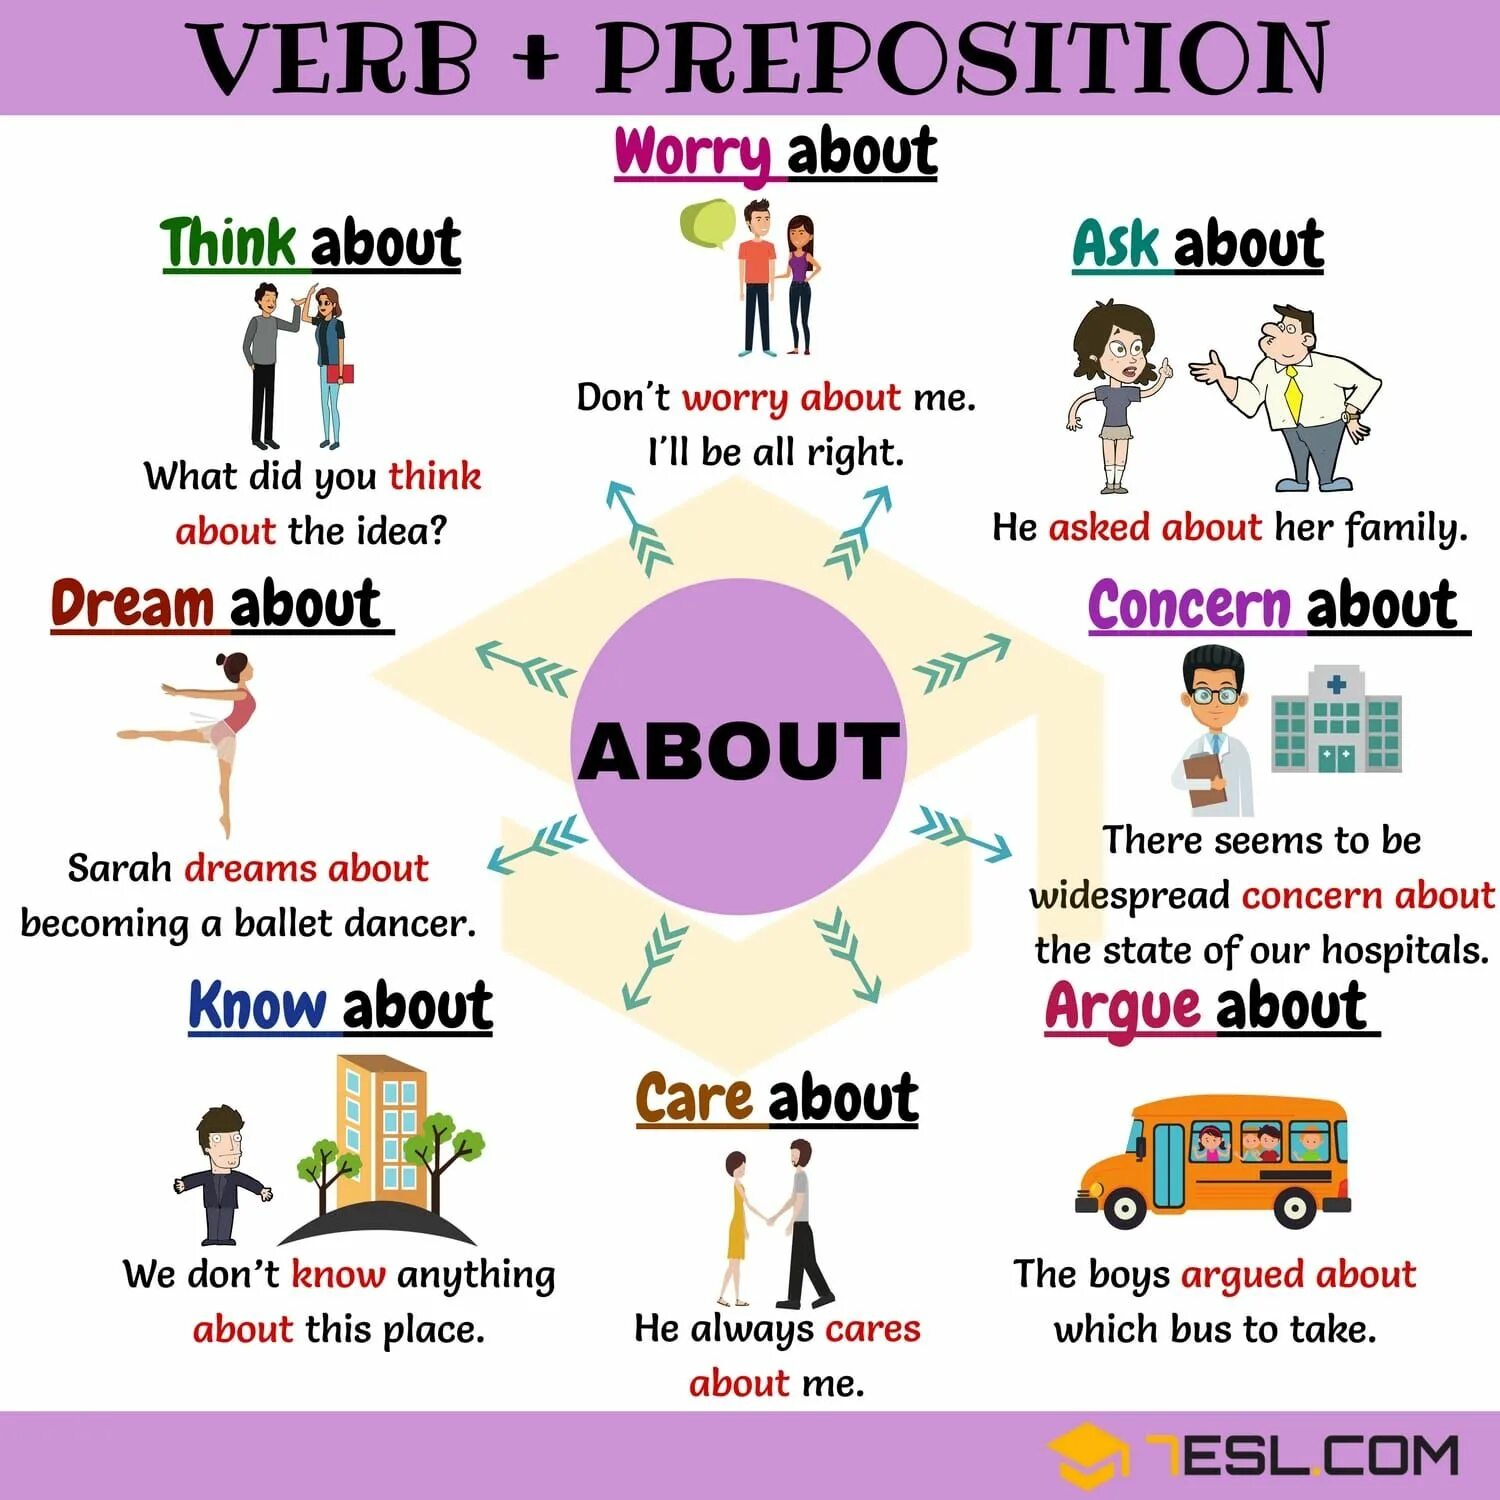 Think перевод на русский. Prepositional verbs в английском языке. Verbs with prepositions в английском языке. Предлоги of to about. About в английском языке.